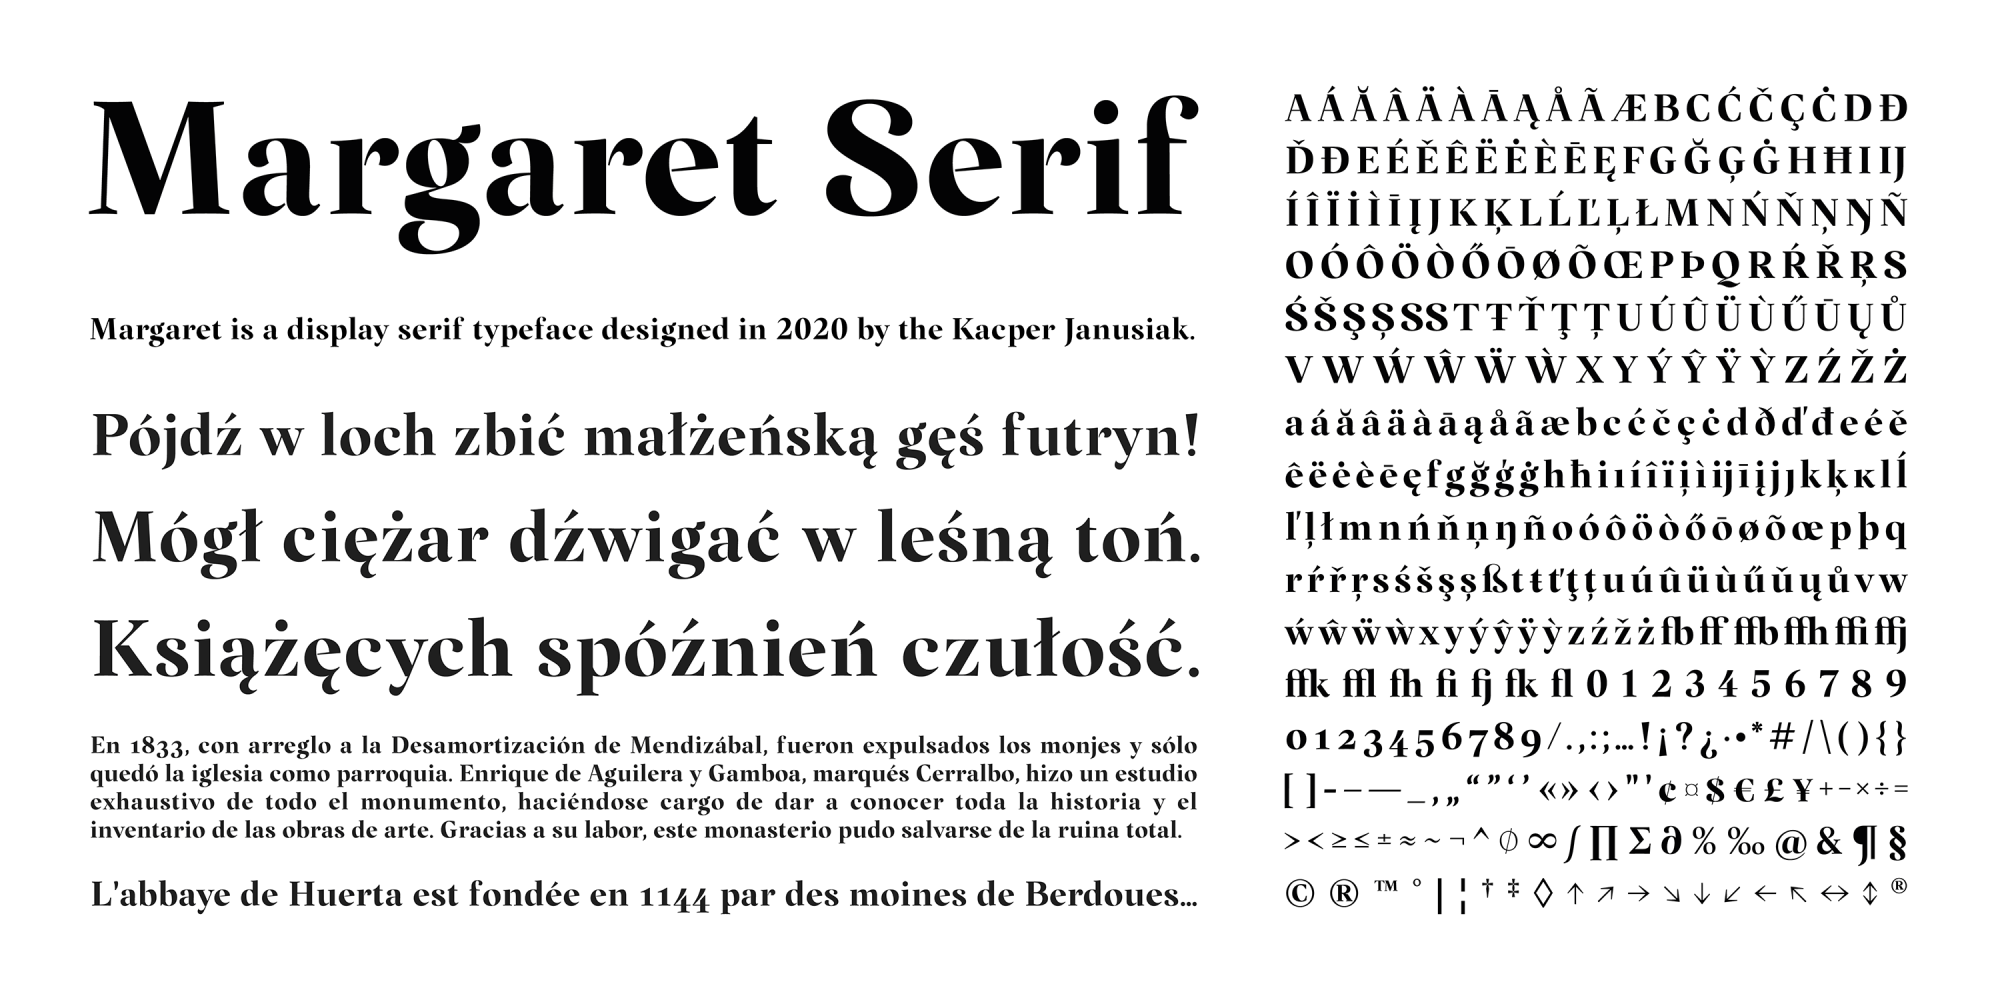 Margaret Serif Typoteka